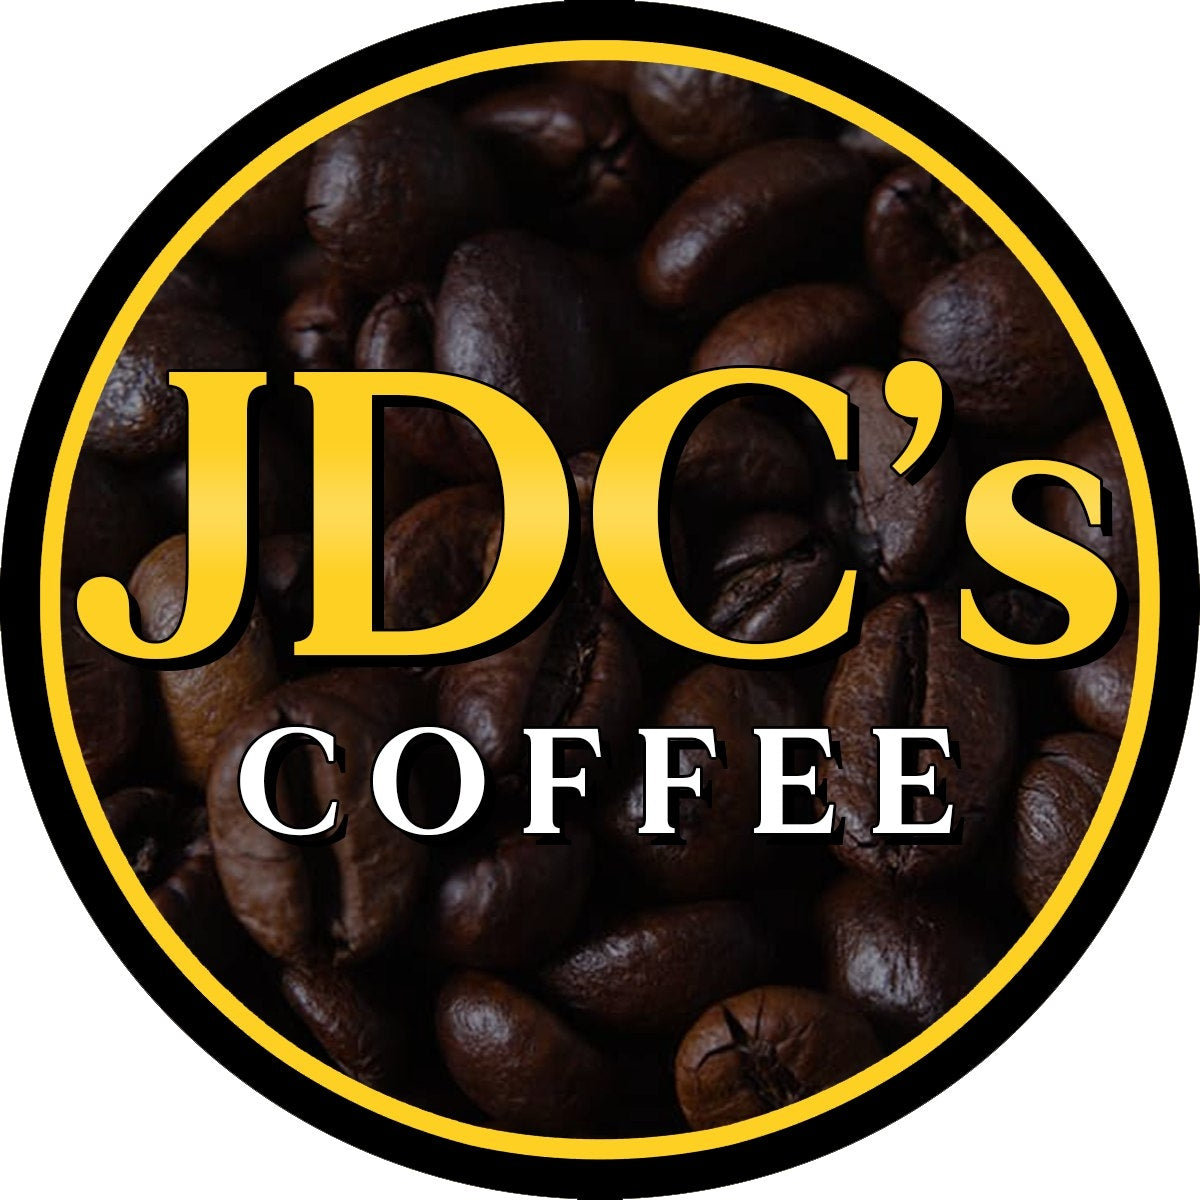 JDC'S COFFEE